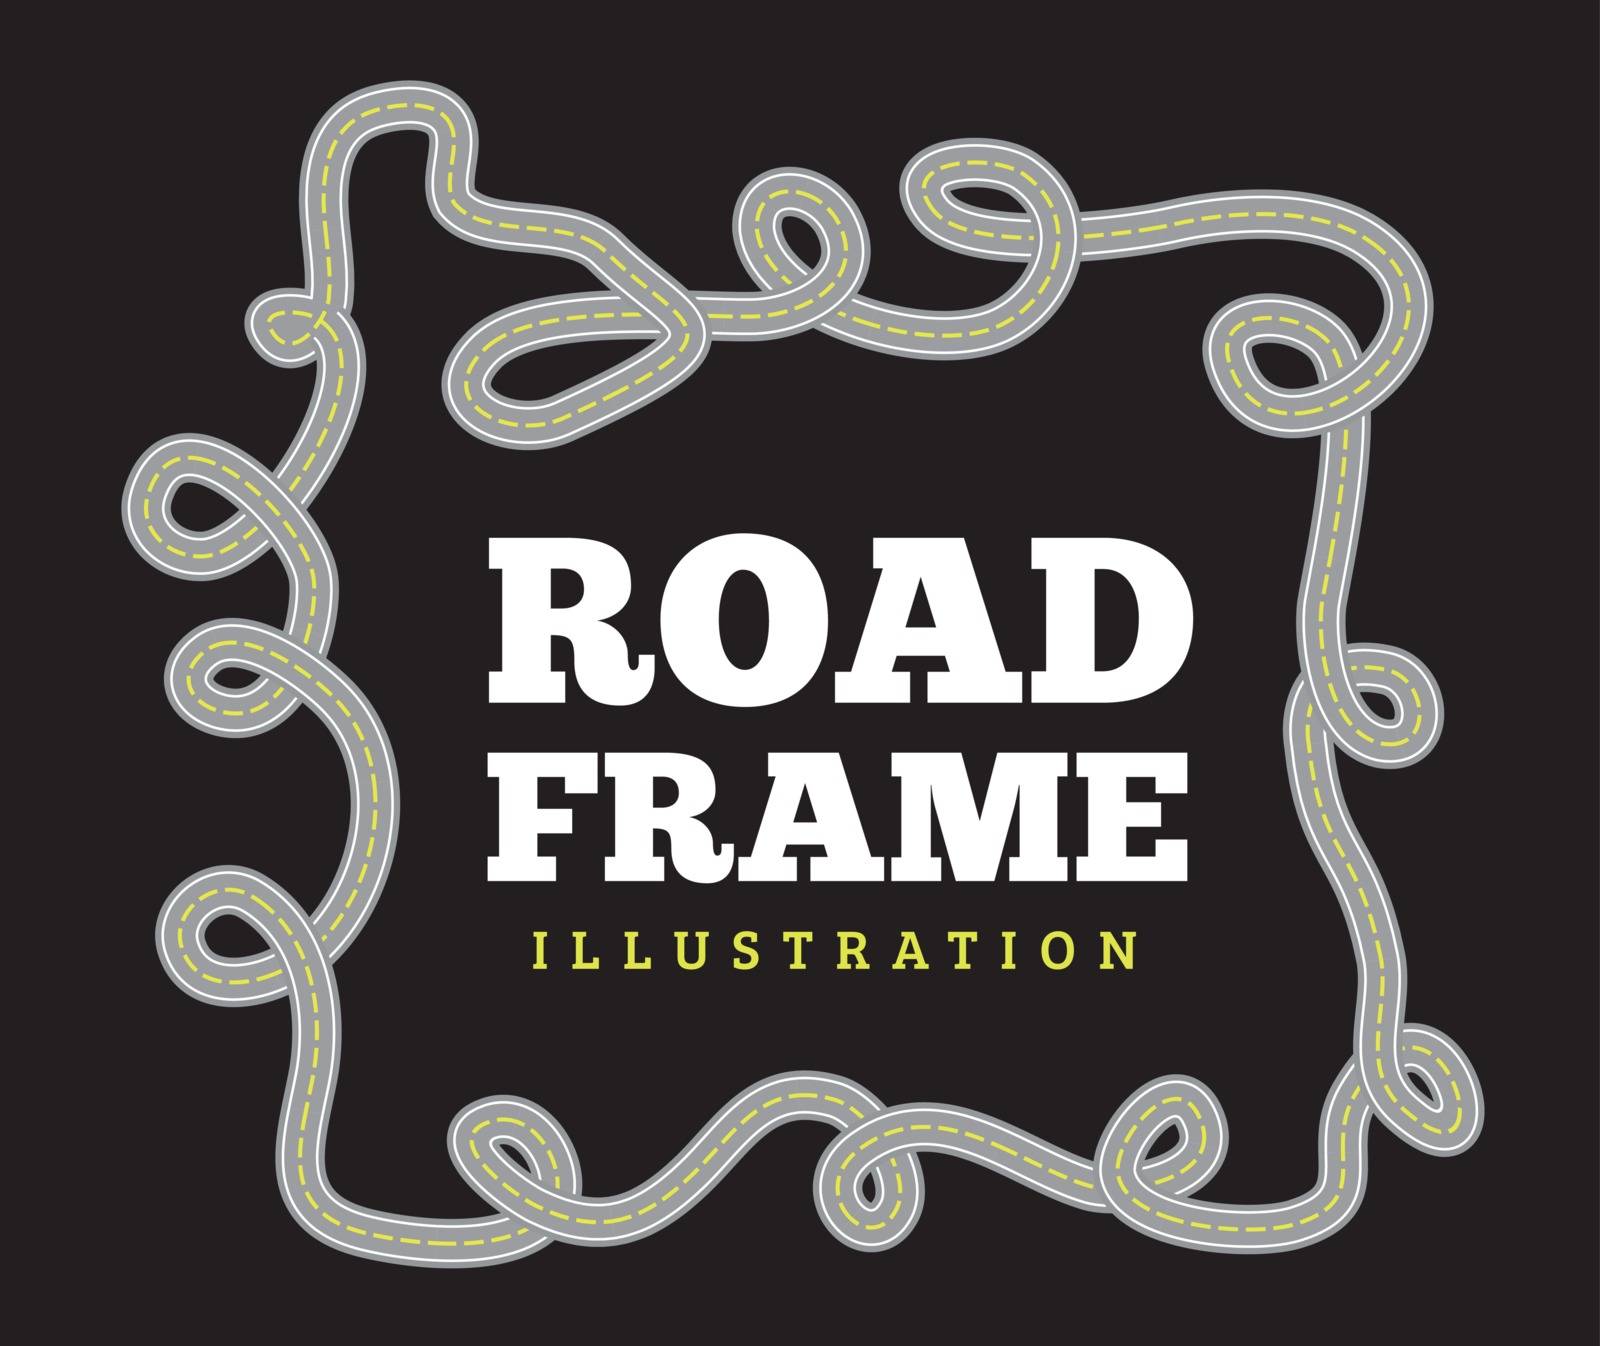 Curved road track in a frame. Vector illustration on black background